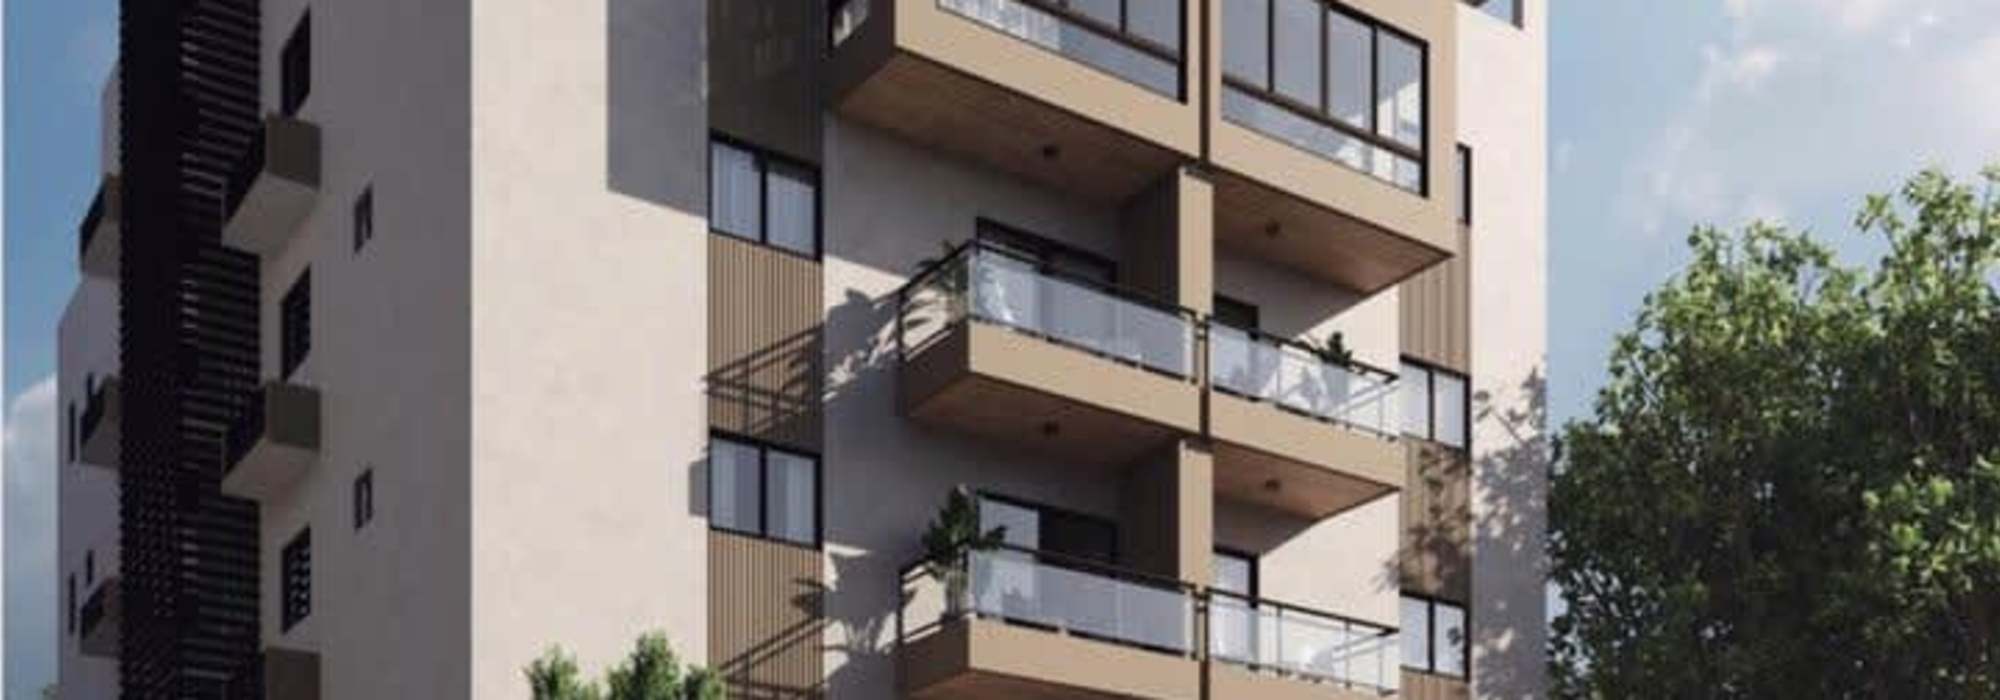 Apartments for sale in Viejo Arroyo Hondo, Santo Domingo